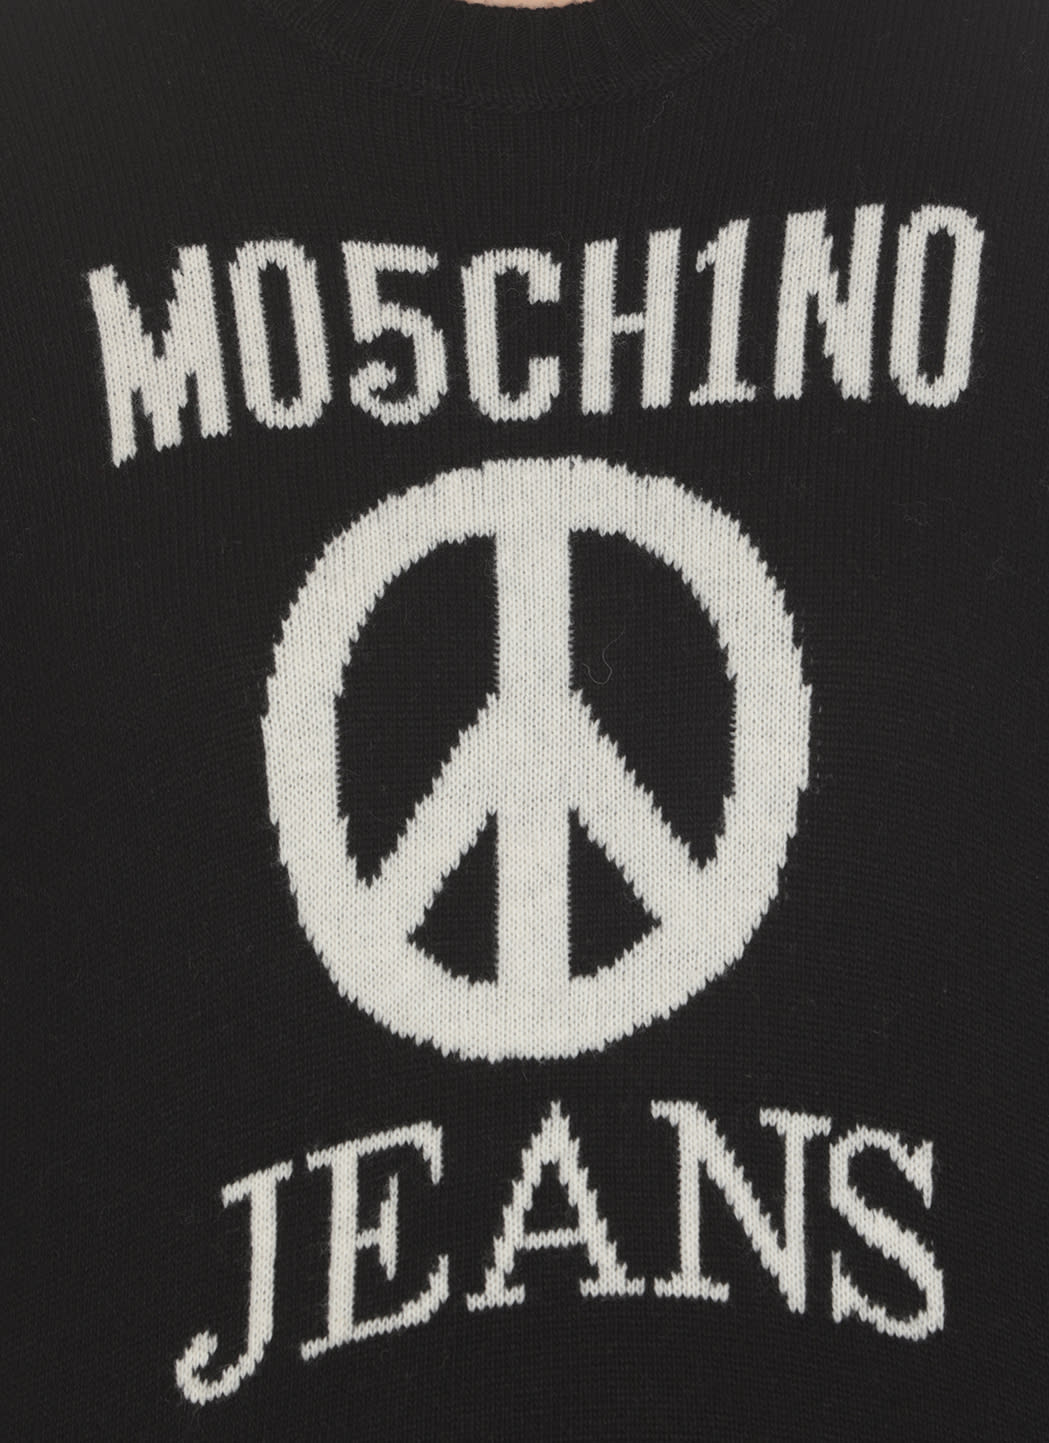 Shop M05ch1n0 Jeans Jeans Logo Intarsia-knit Dress In Black